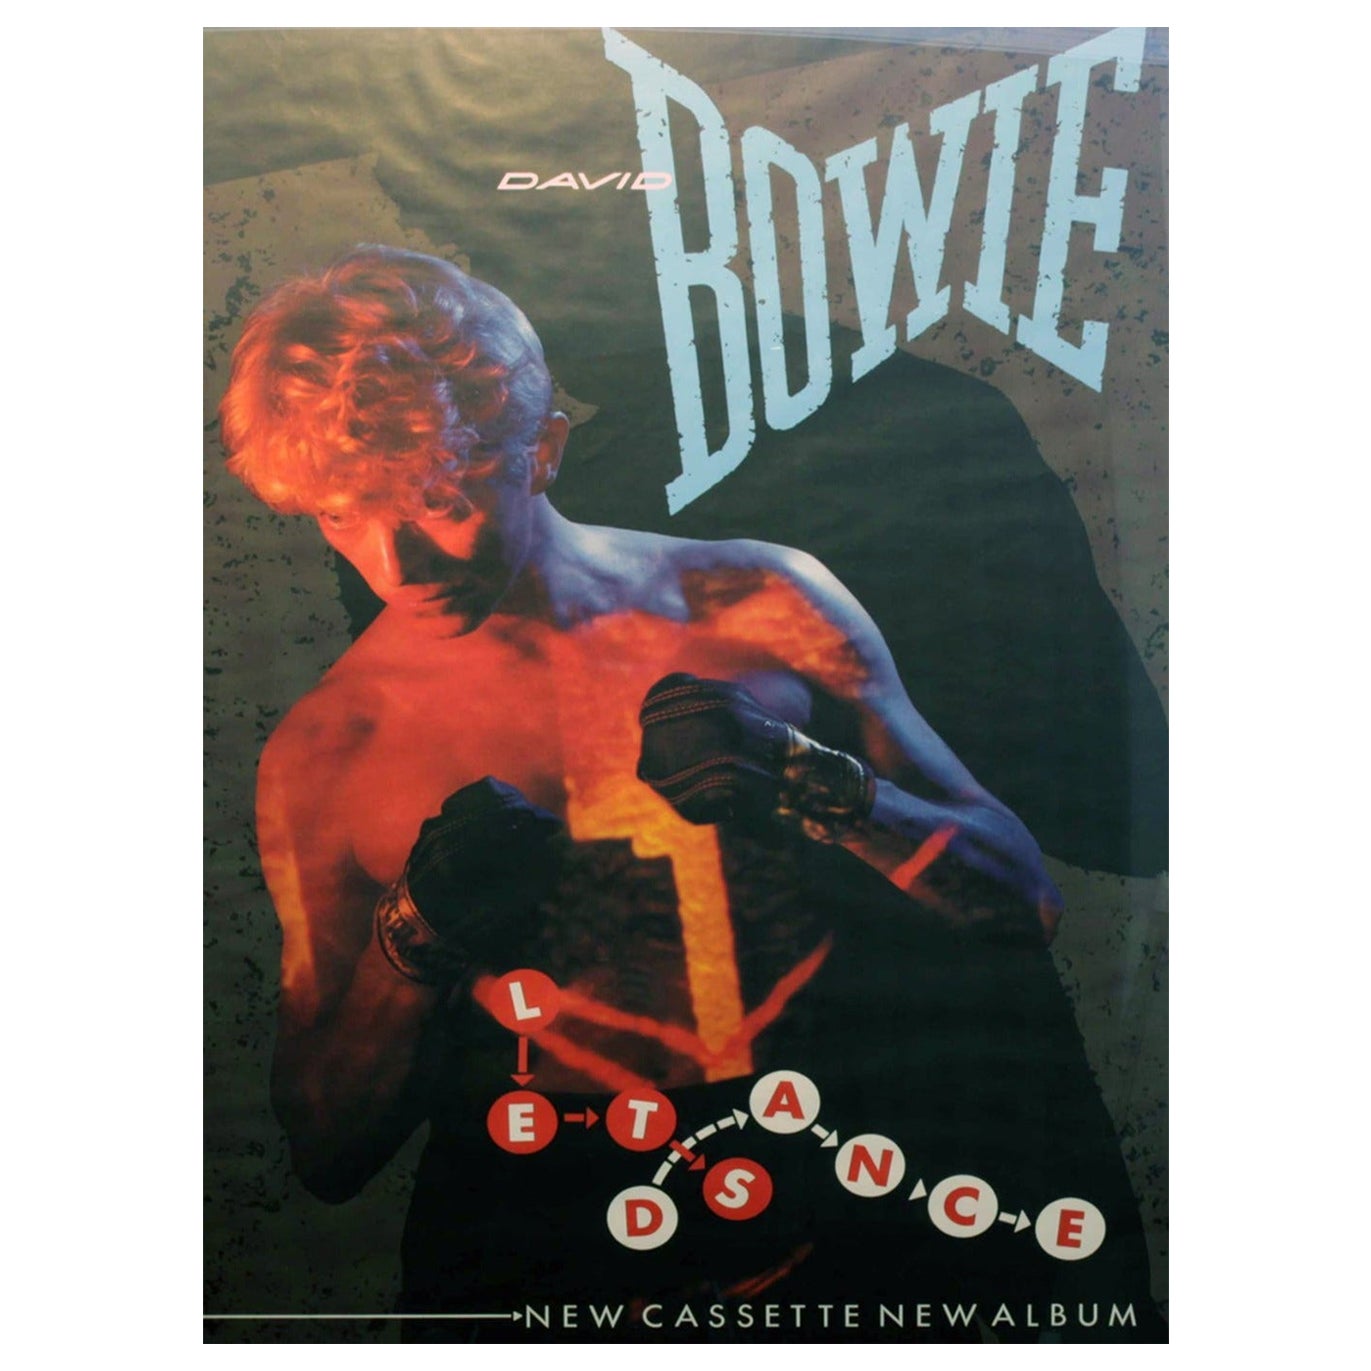 1983 David Bowie, Let's Dance Original Vintage Poster